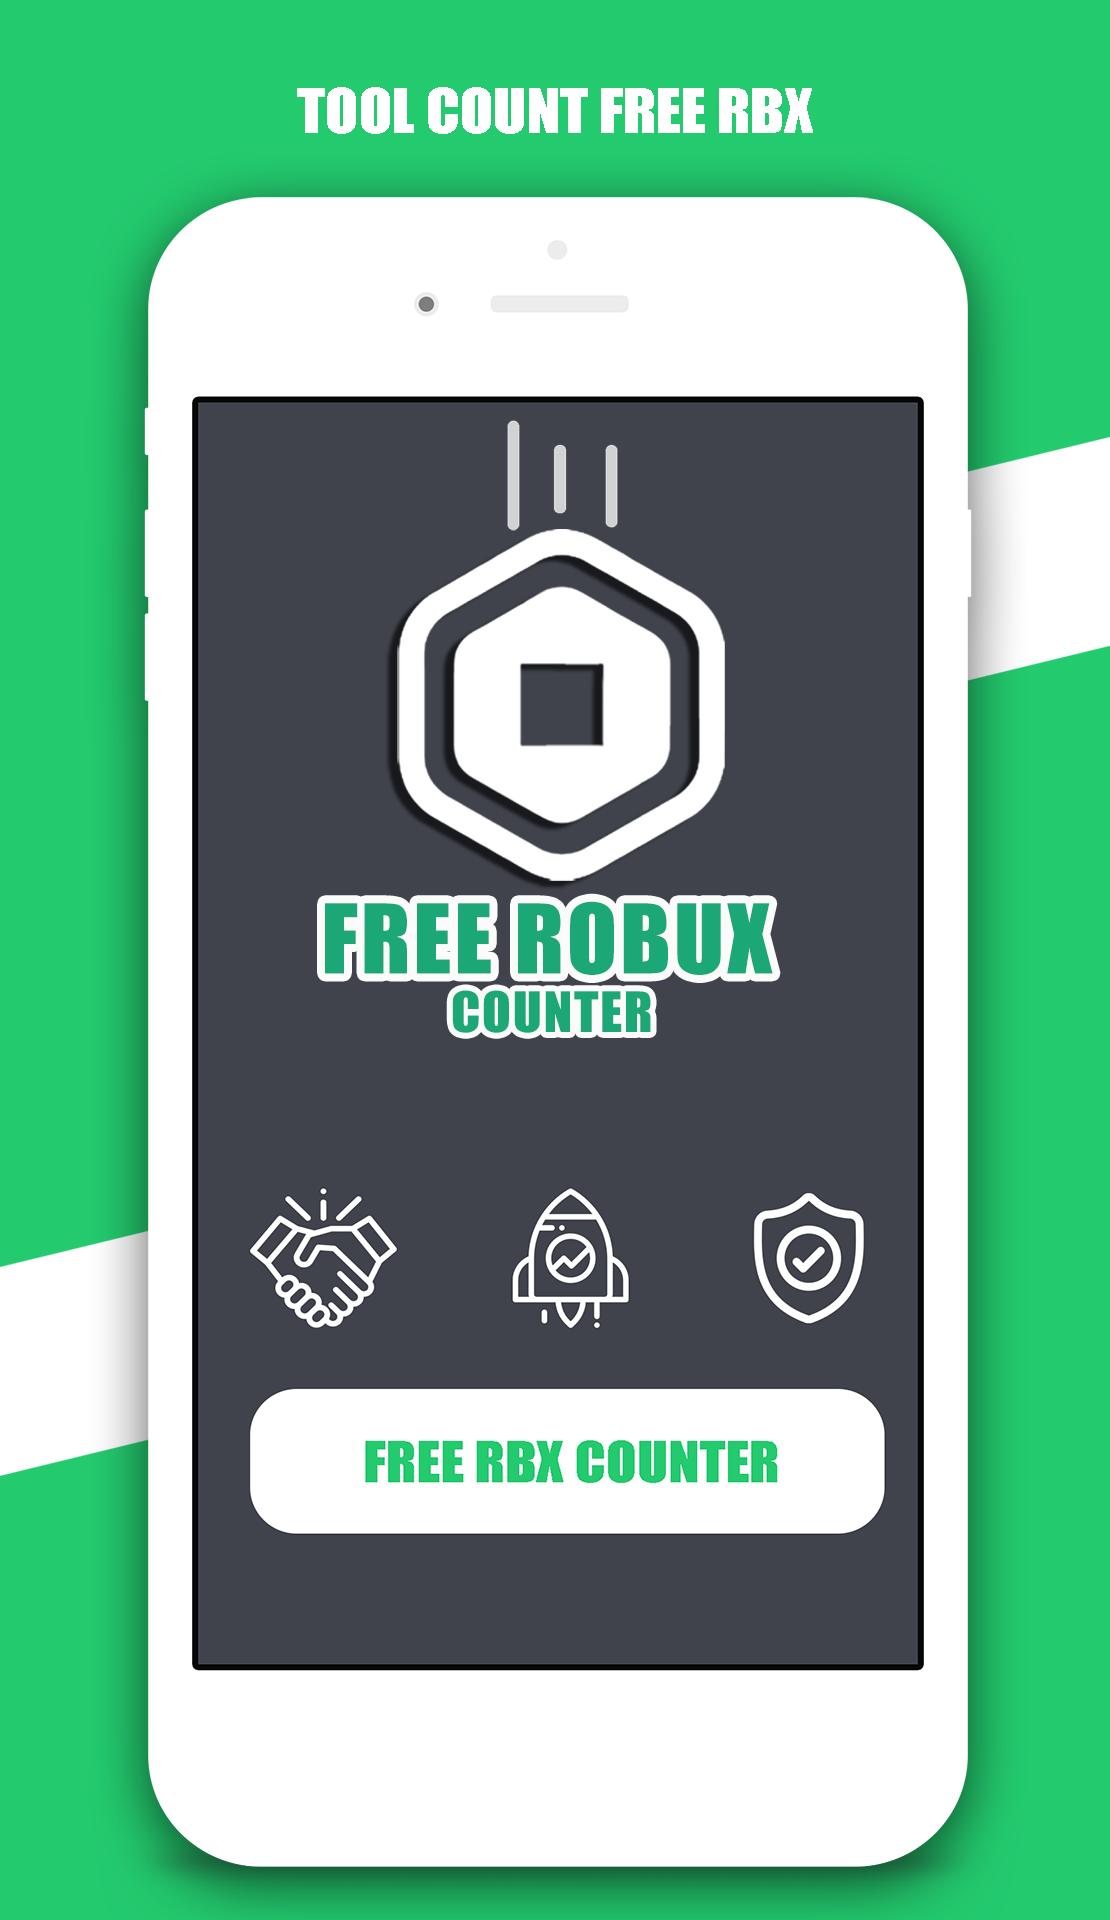 Android Icin Free Robux Counter Apk Yi Indir